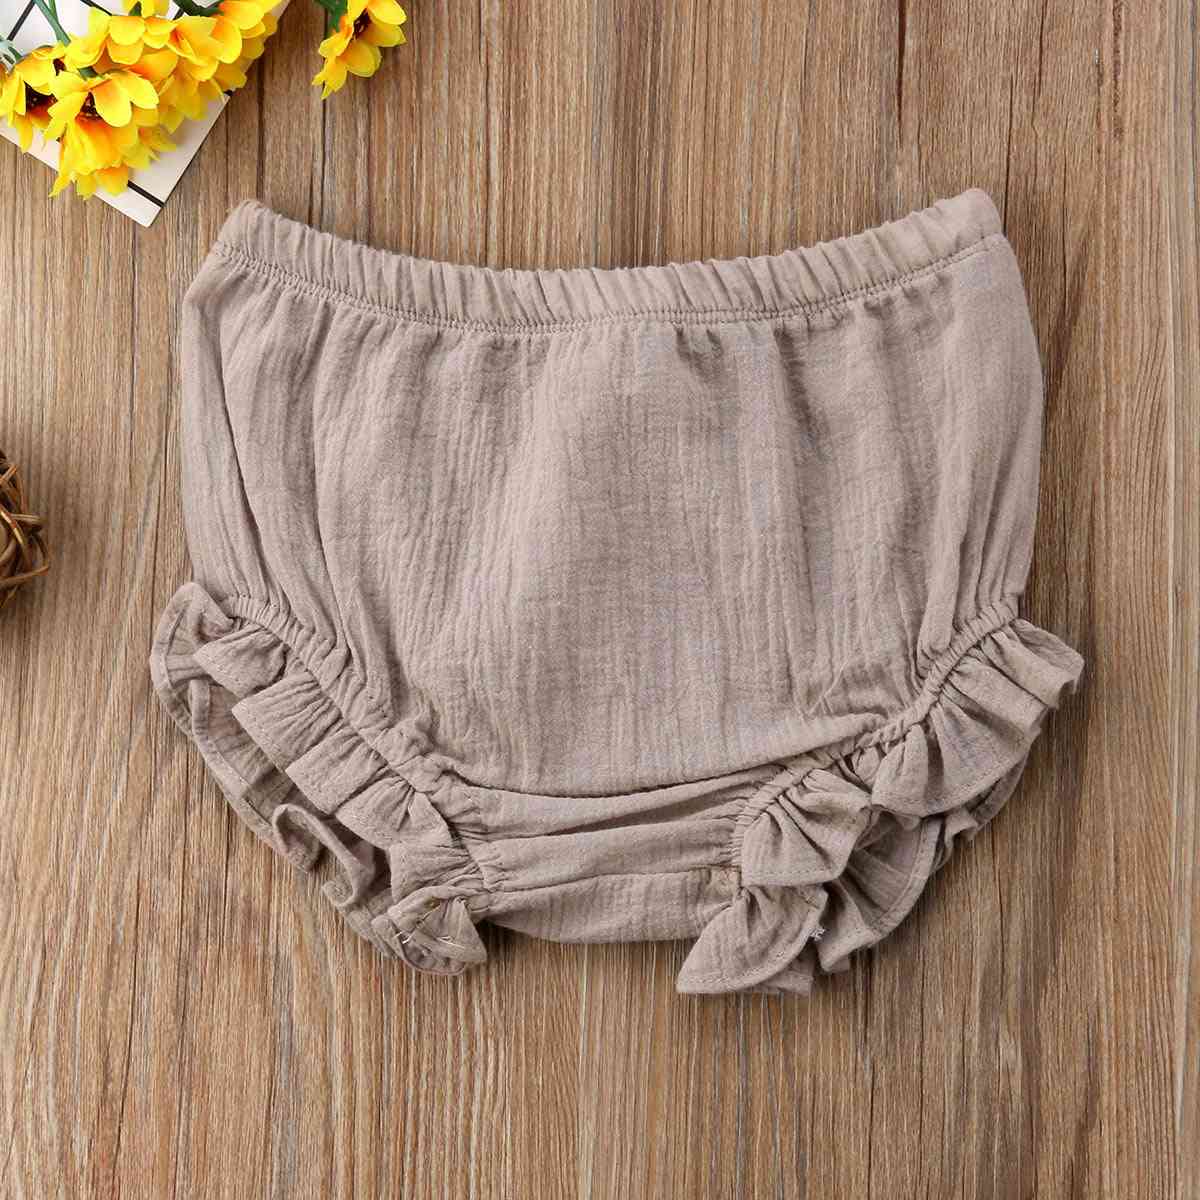 Infant Baby Boy Girl Ruffles Shorts, Cotton Nappy Diaper Covers Cute Panties